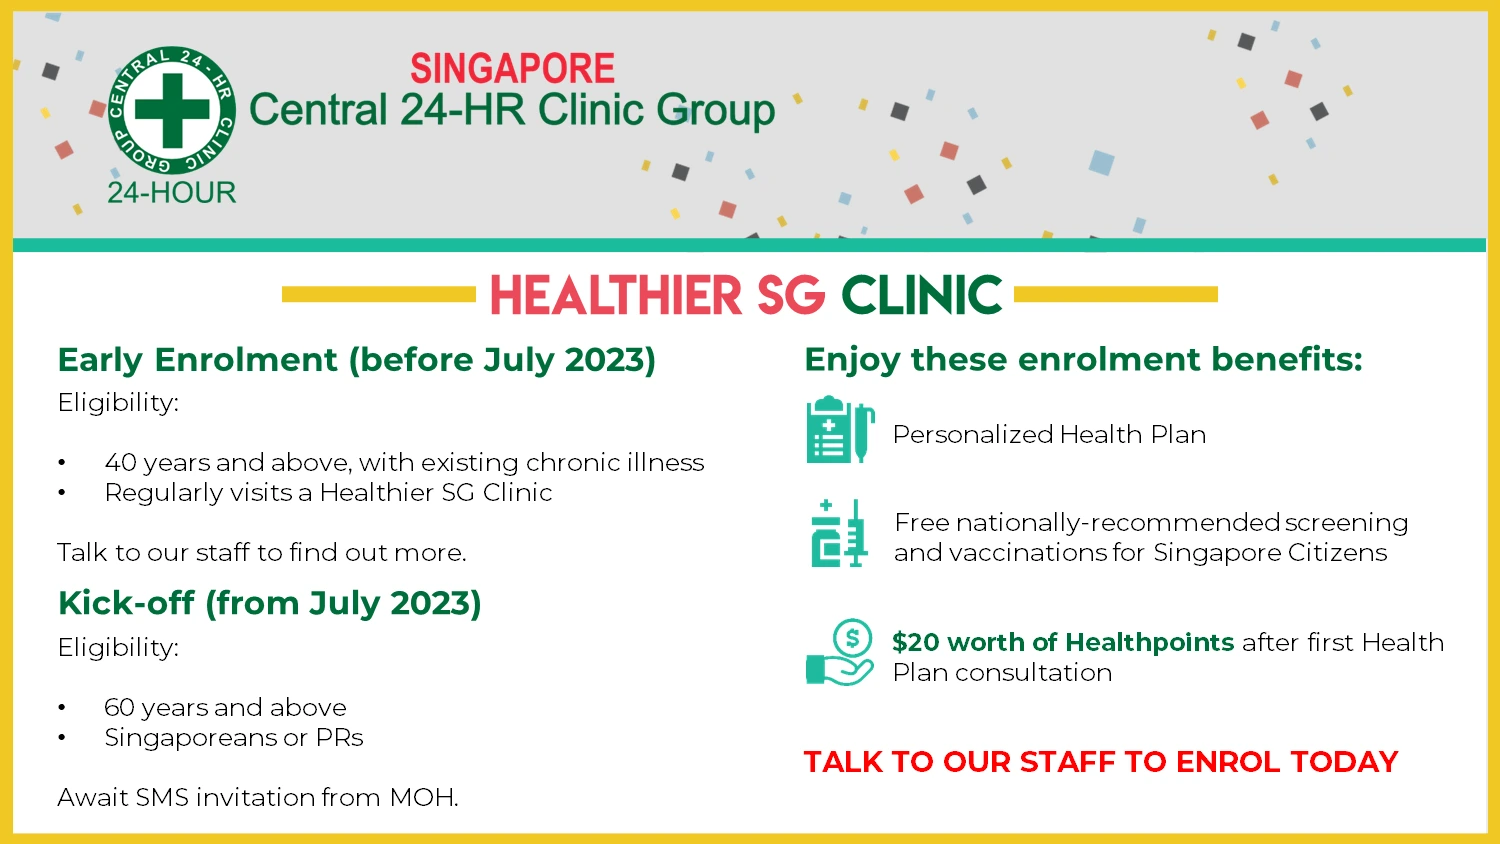 Central 24-HR Clinic Group is a Healthier SG Clinic.